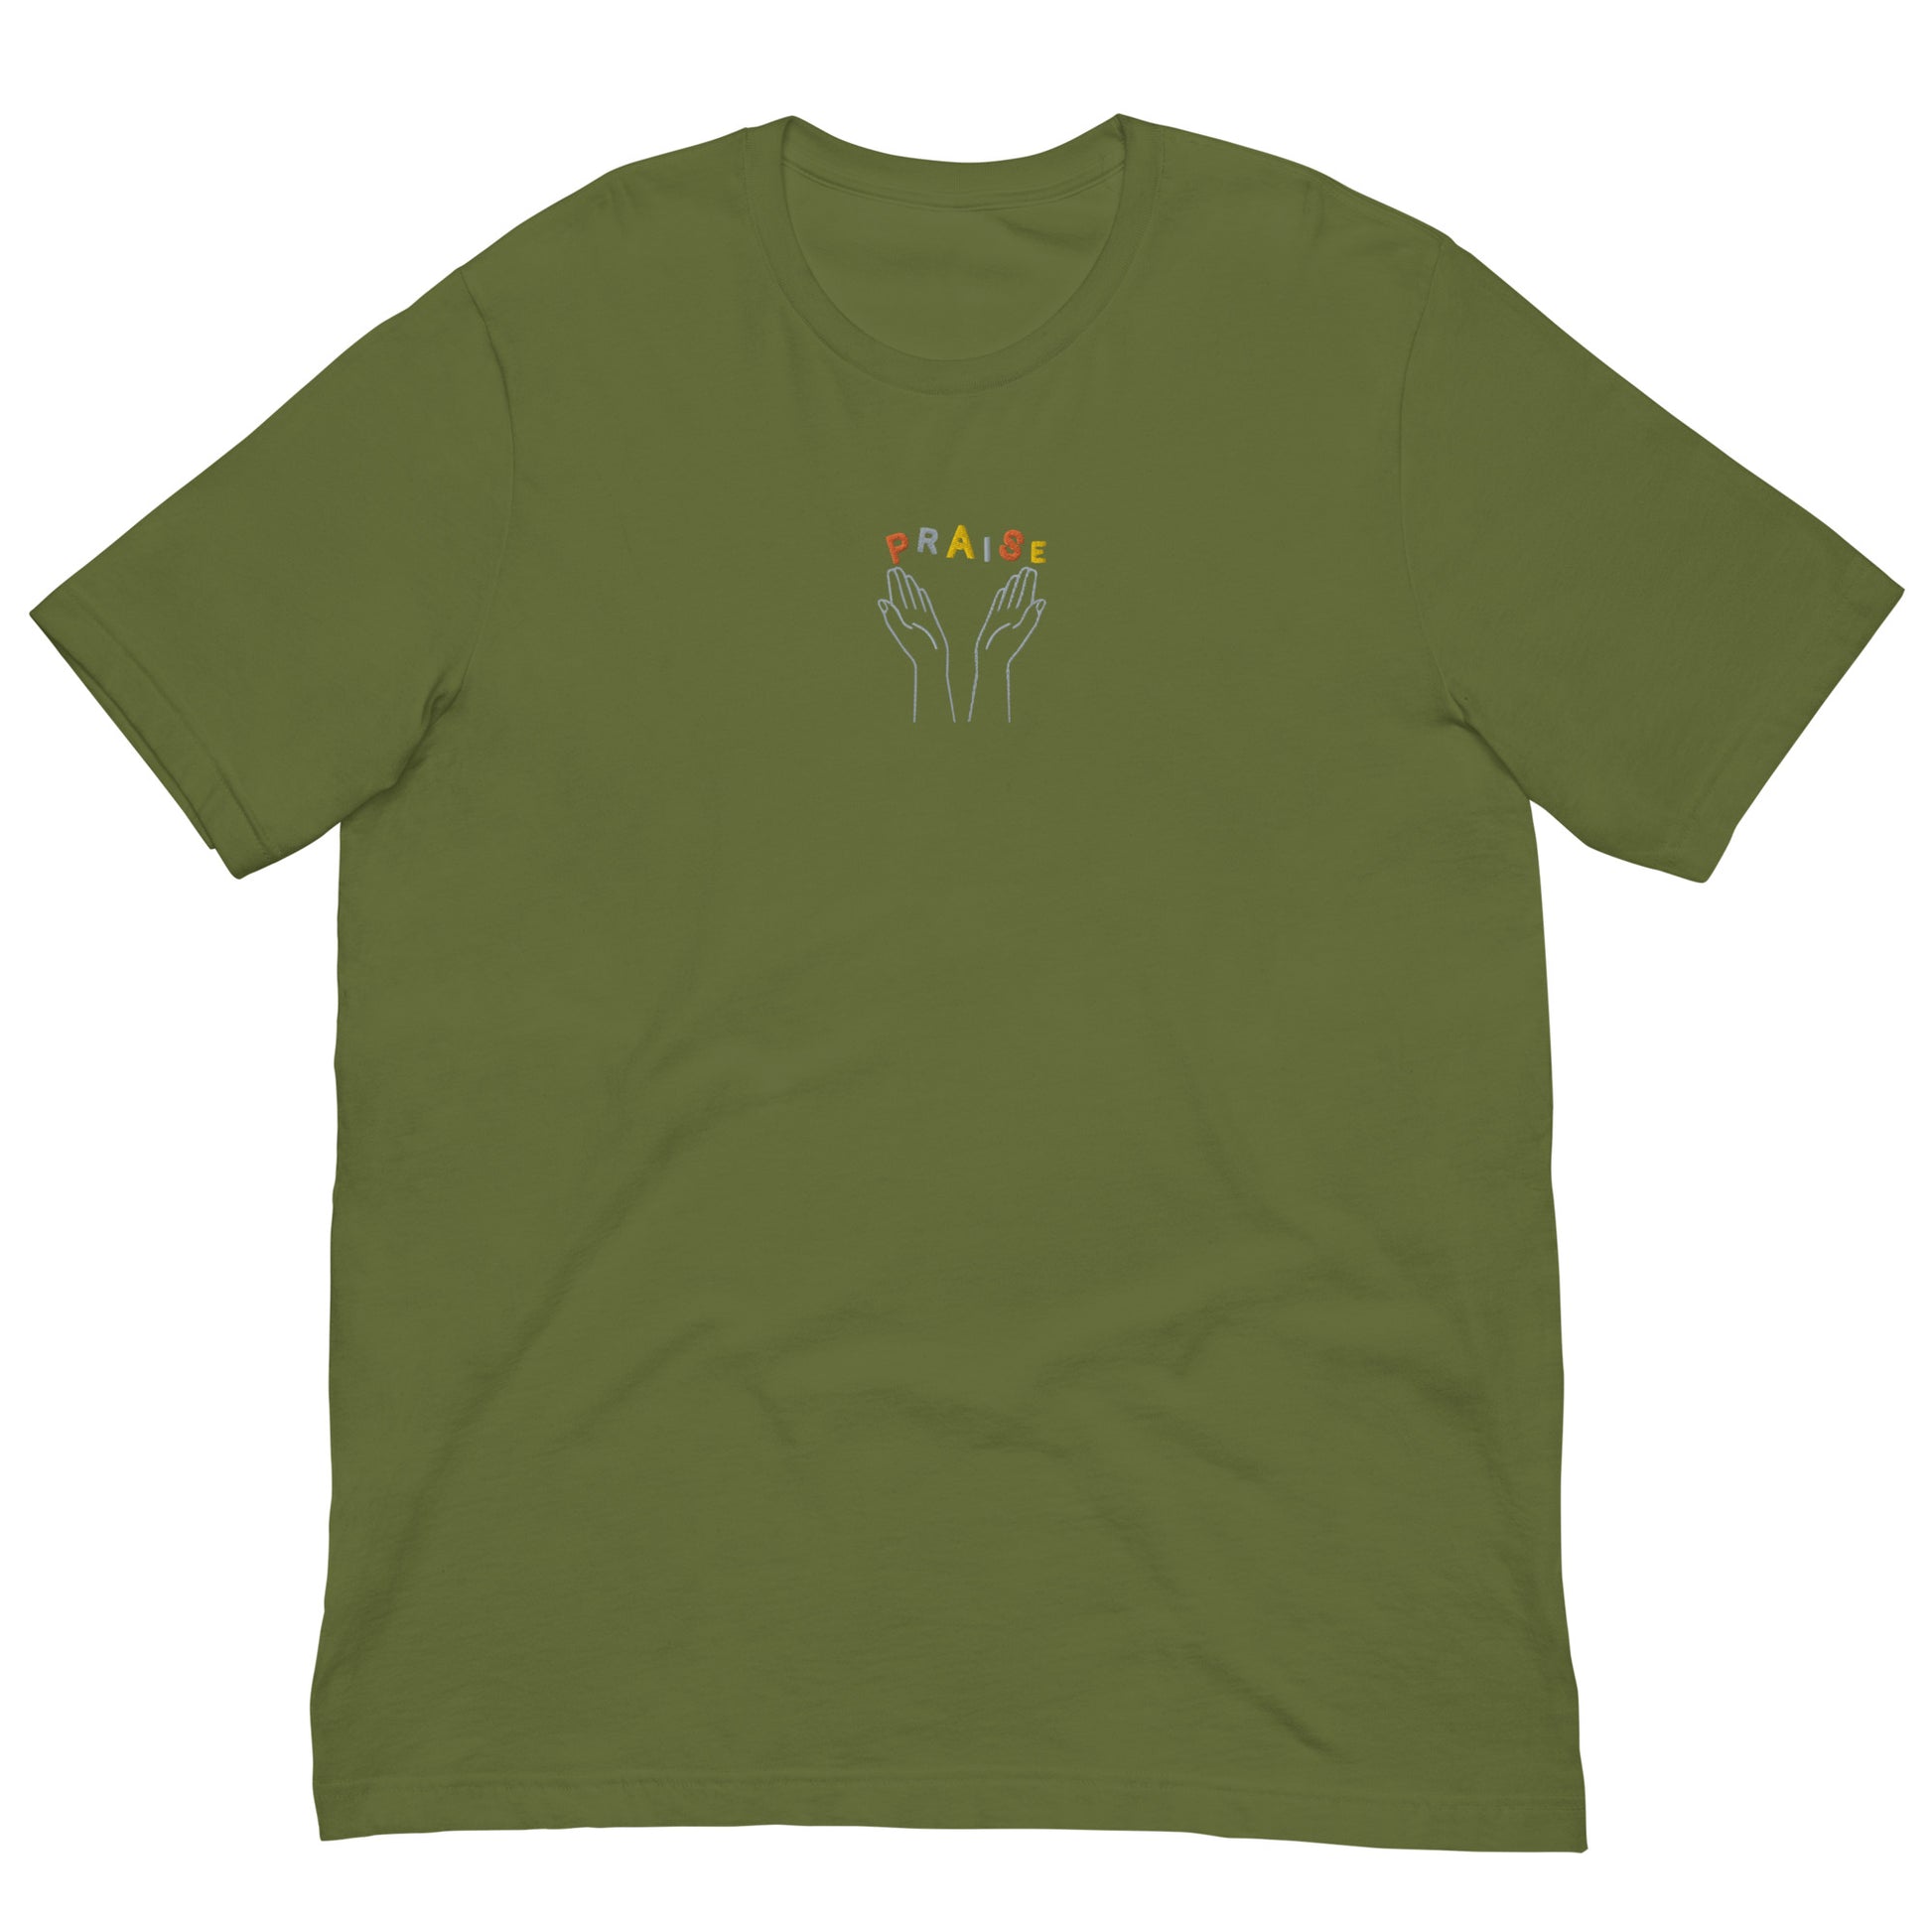 Praise Hands Embroidered T-shirt (center) - S / GREEN -